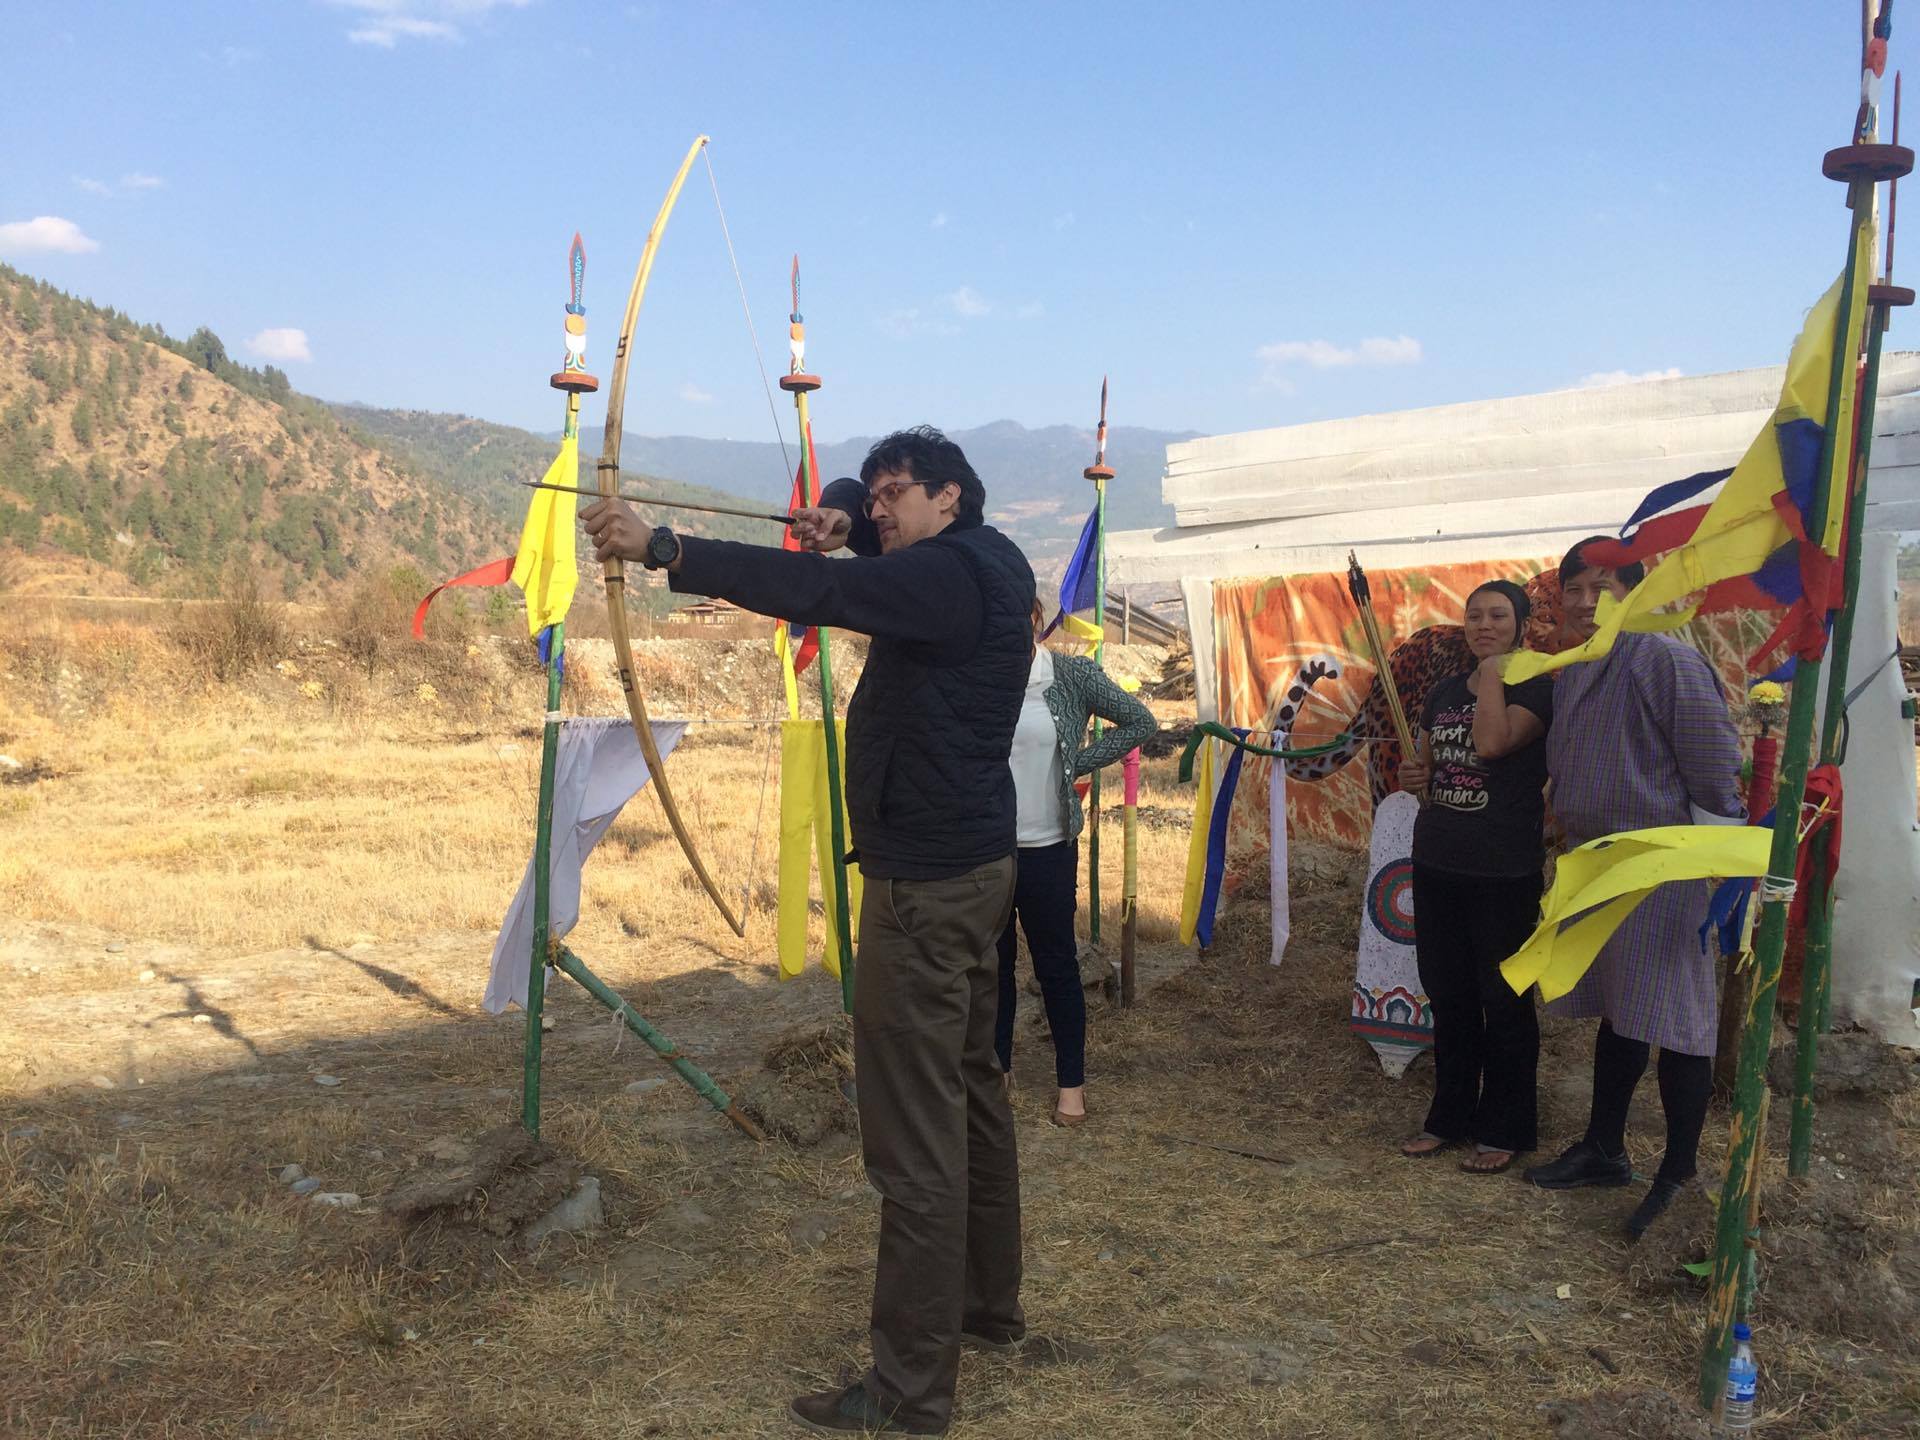 Grand Cultural Tours of Bhutan for Julia